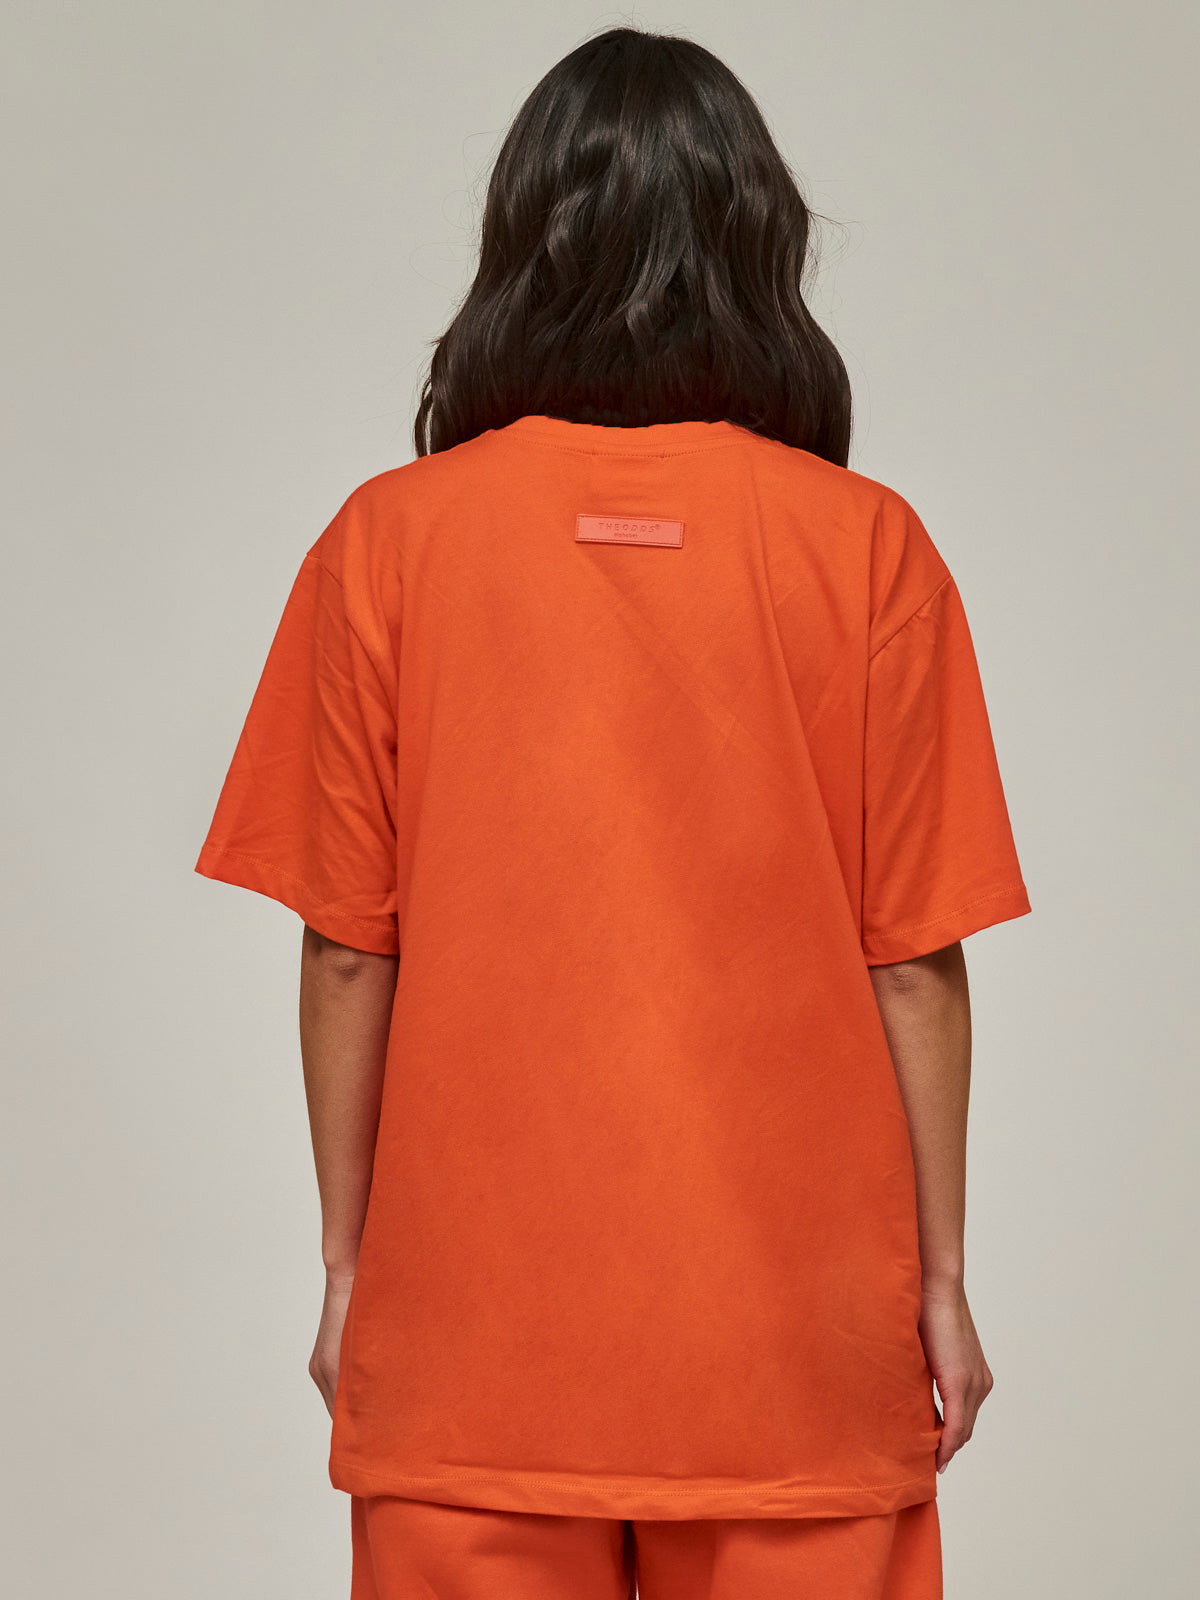 Odd Orange Regular Fit T-Shirt/ alphabet